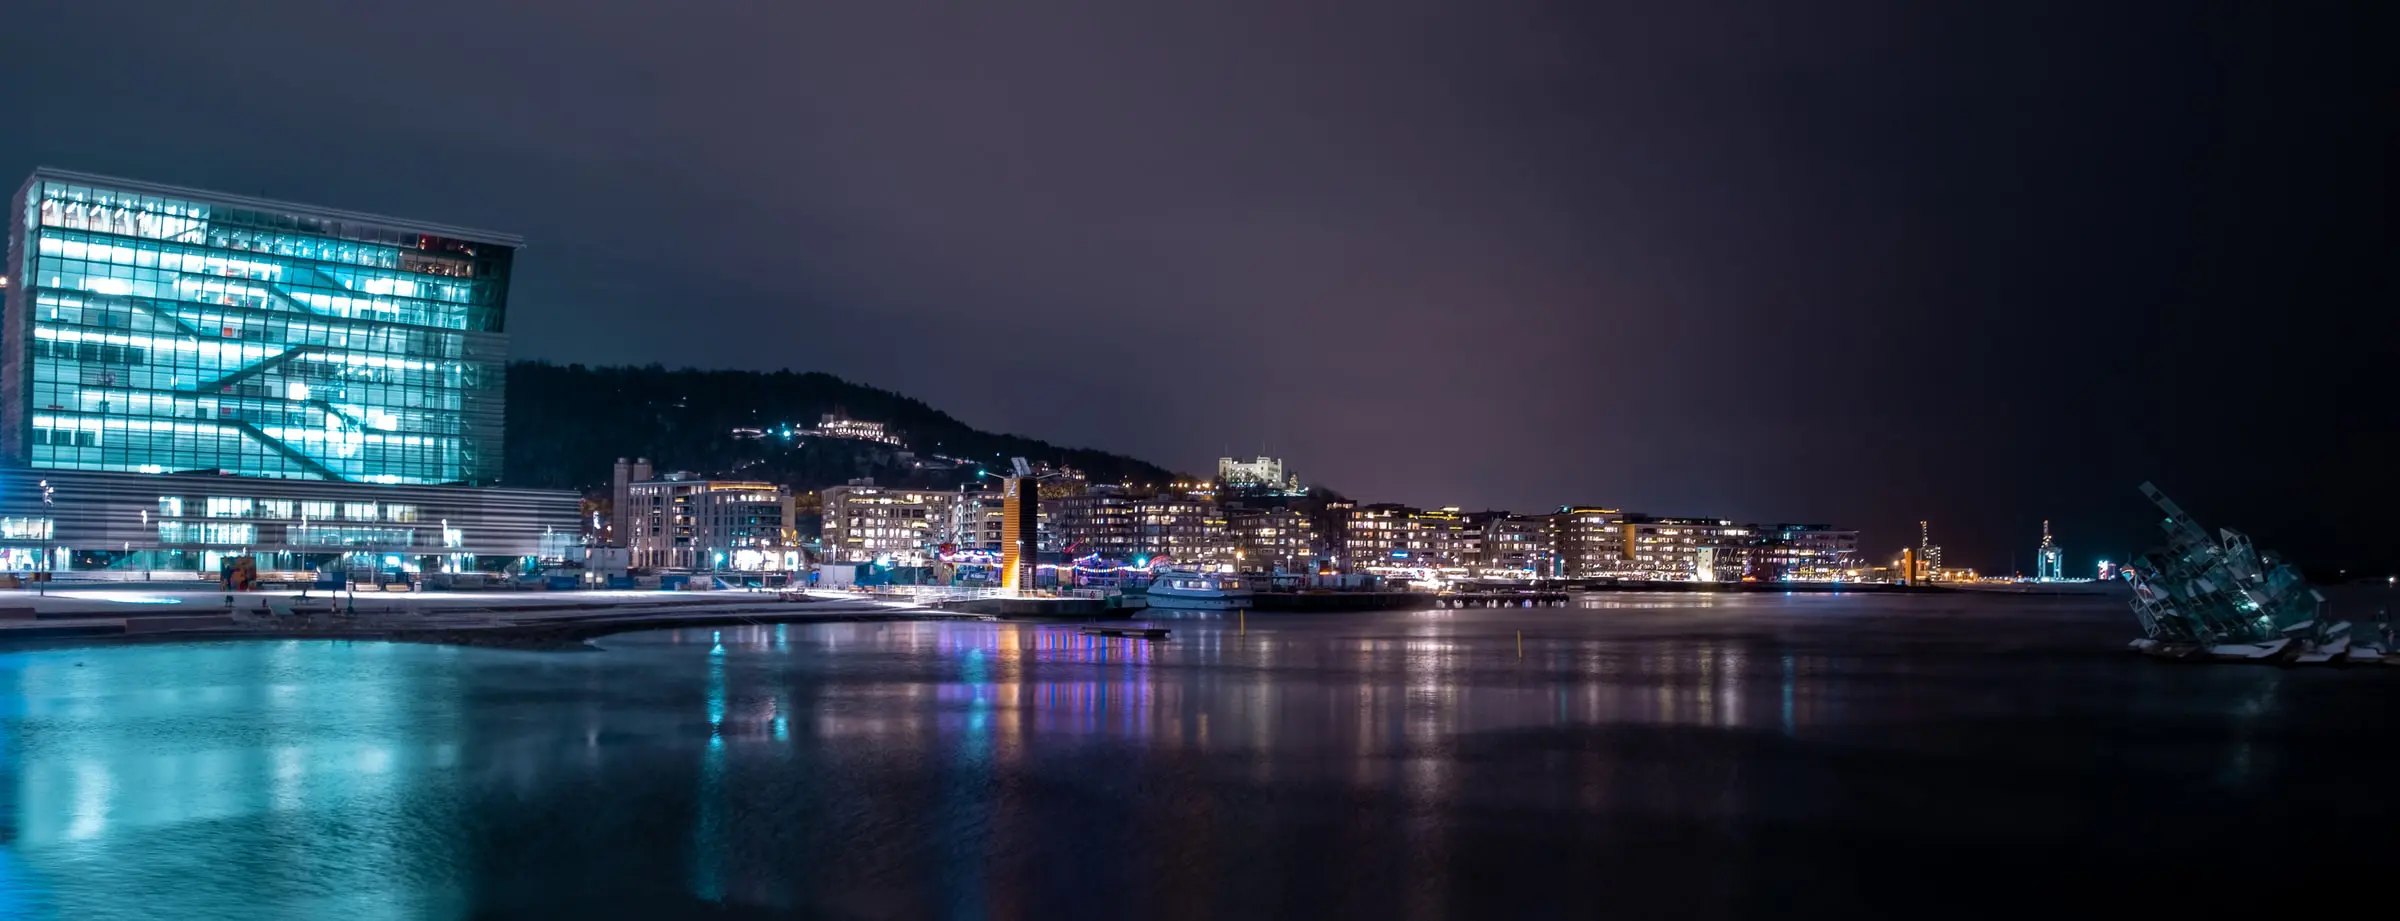 Oslo city at night